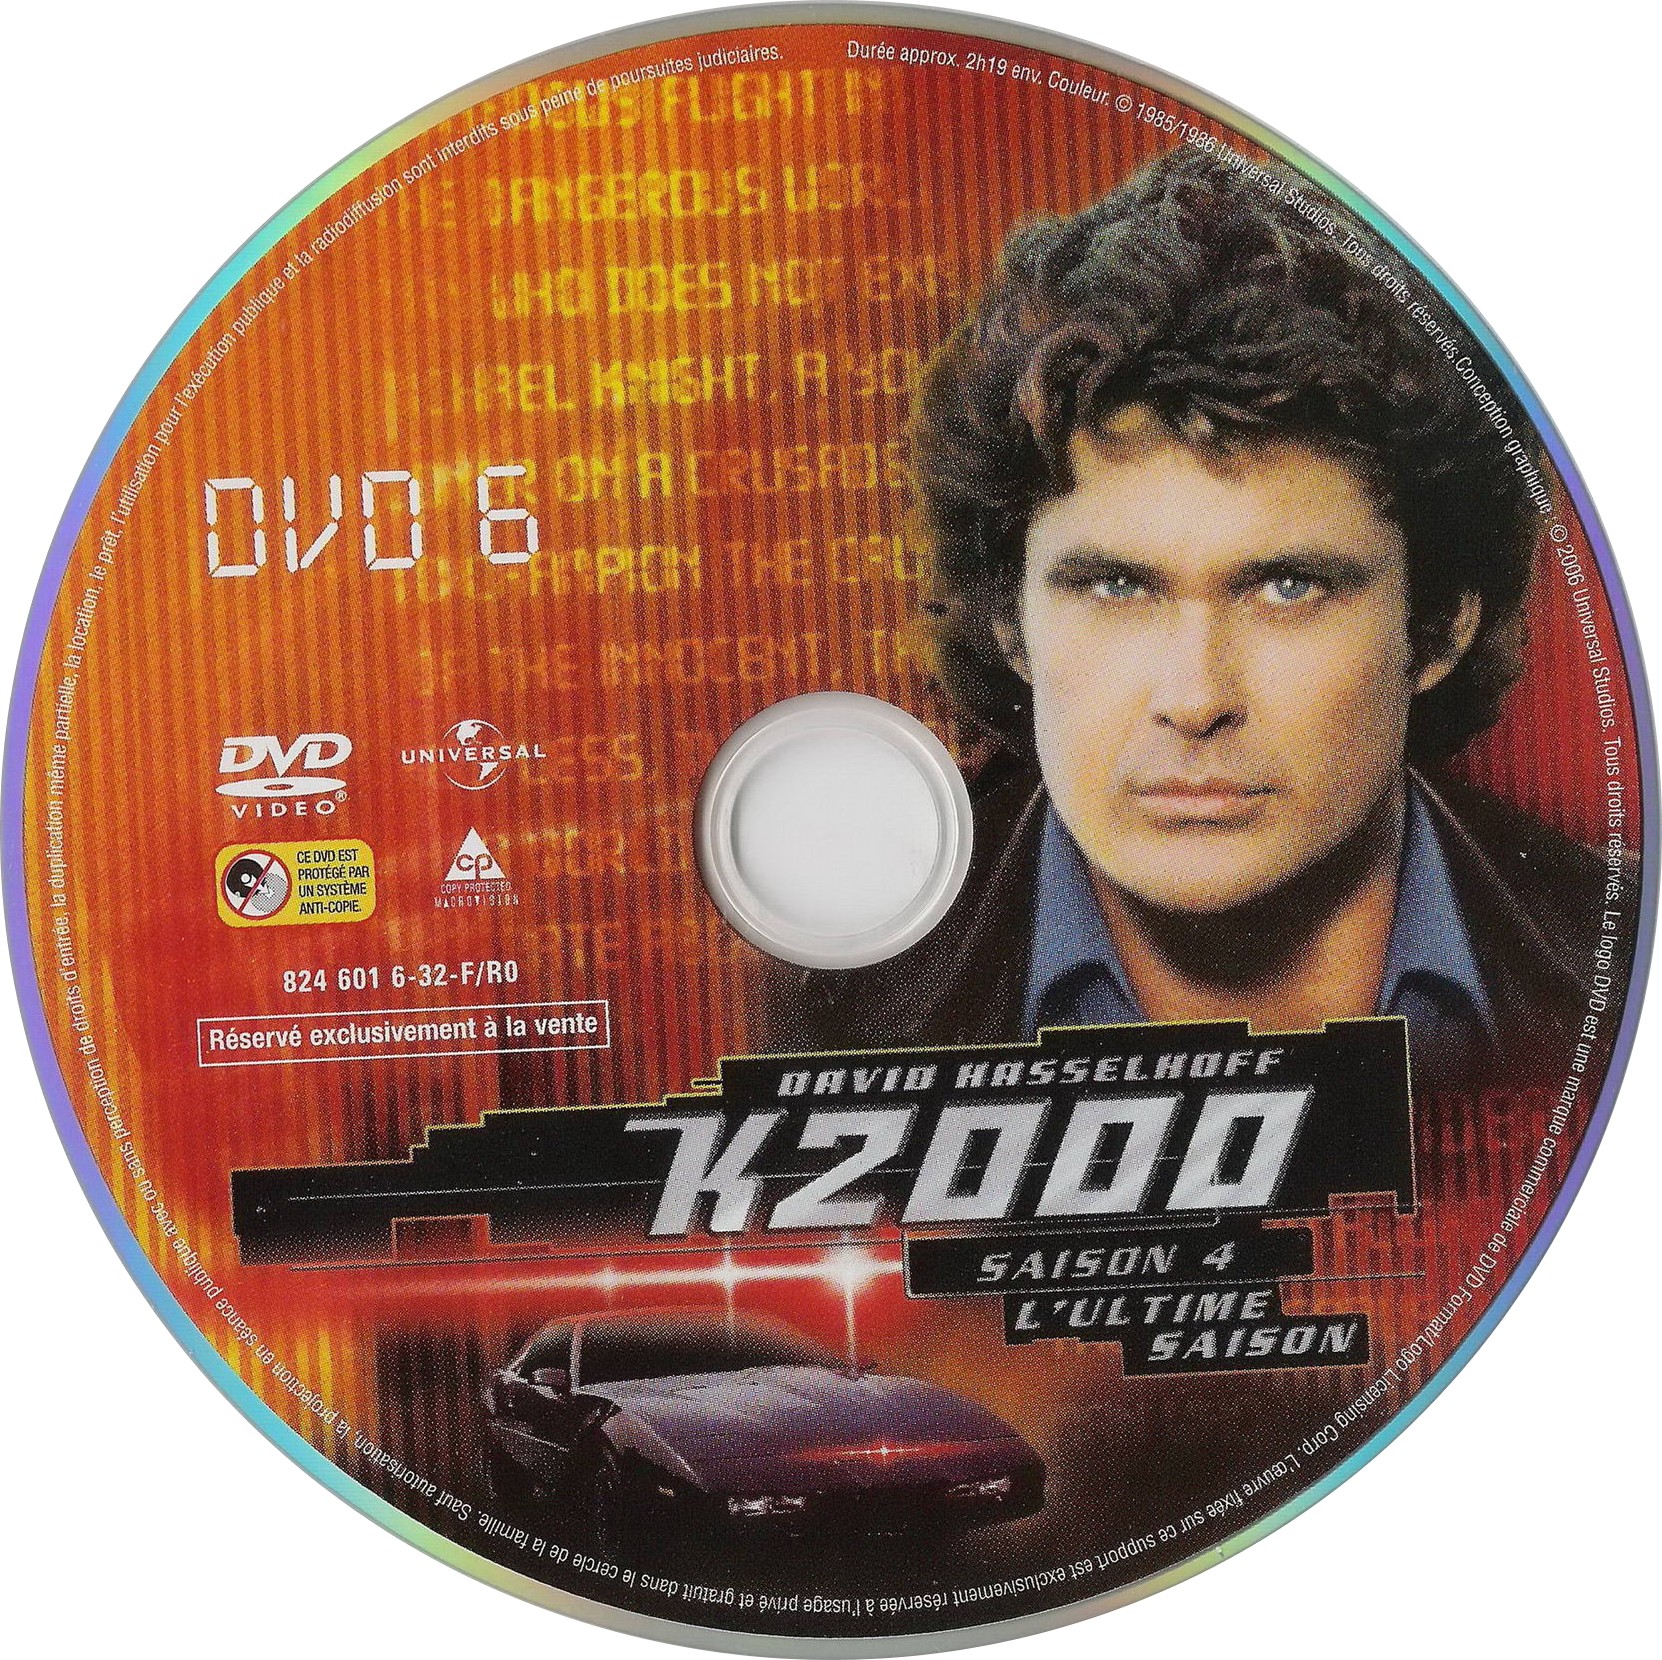 K2000 Saison 4 dvd 6